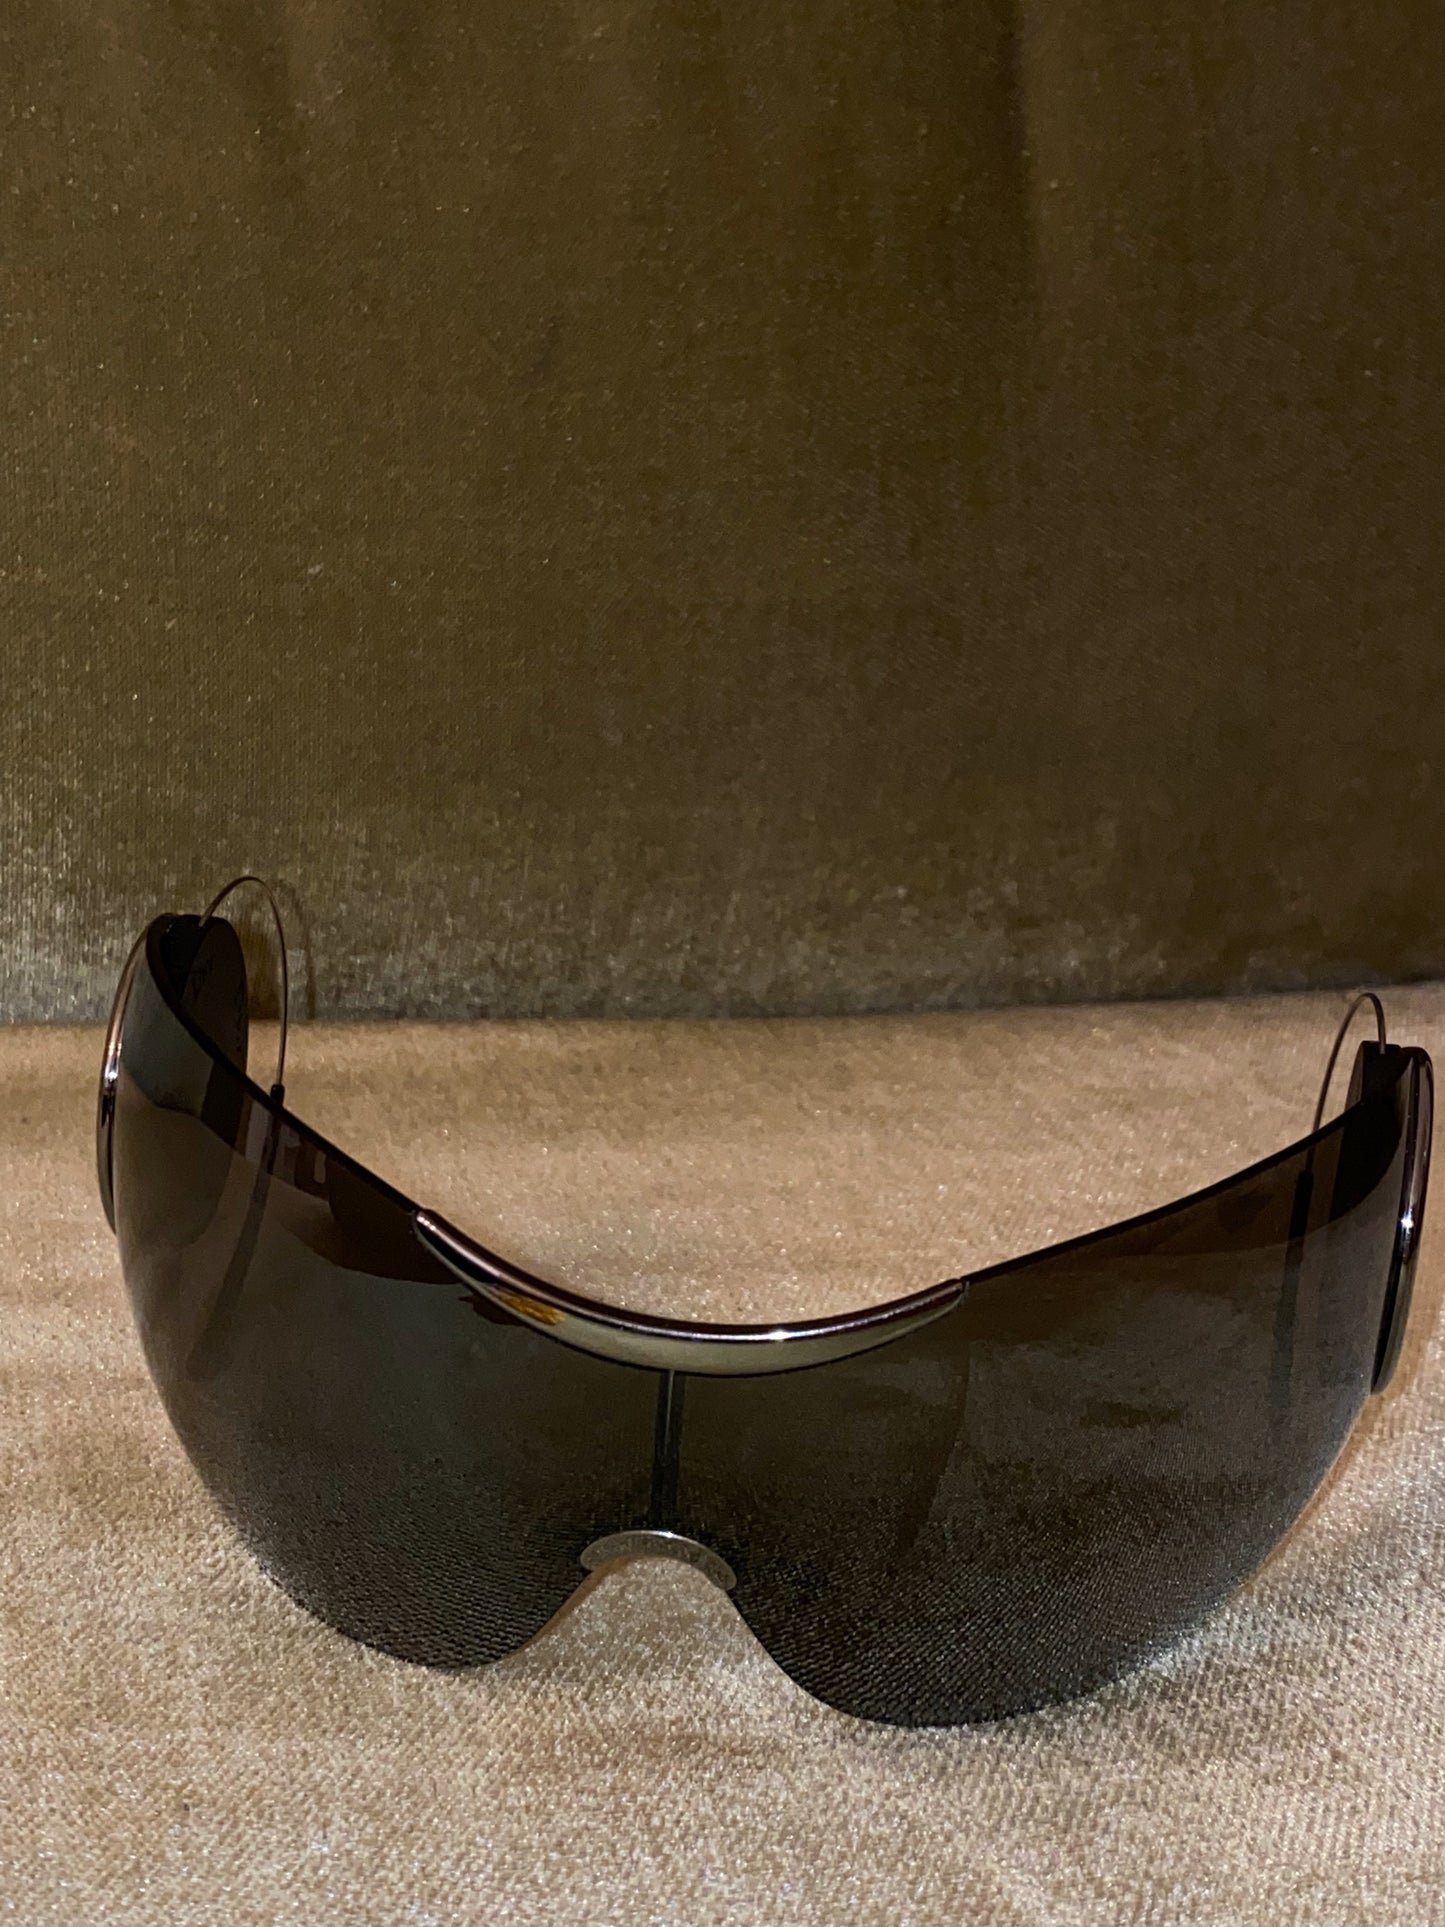 DIOR SPORT 2 SHIELD vintage sunglasses